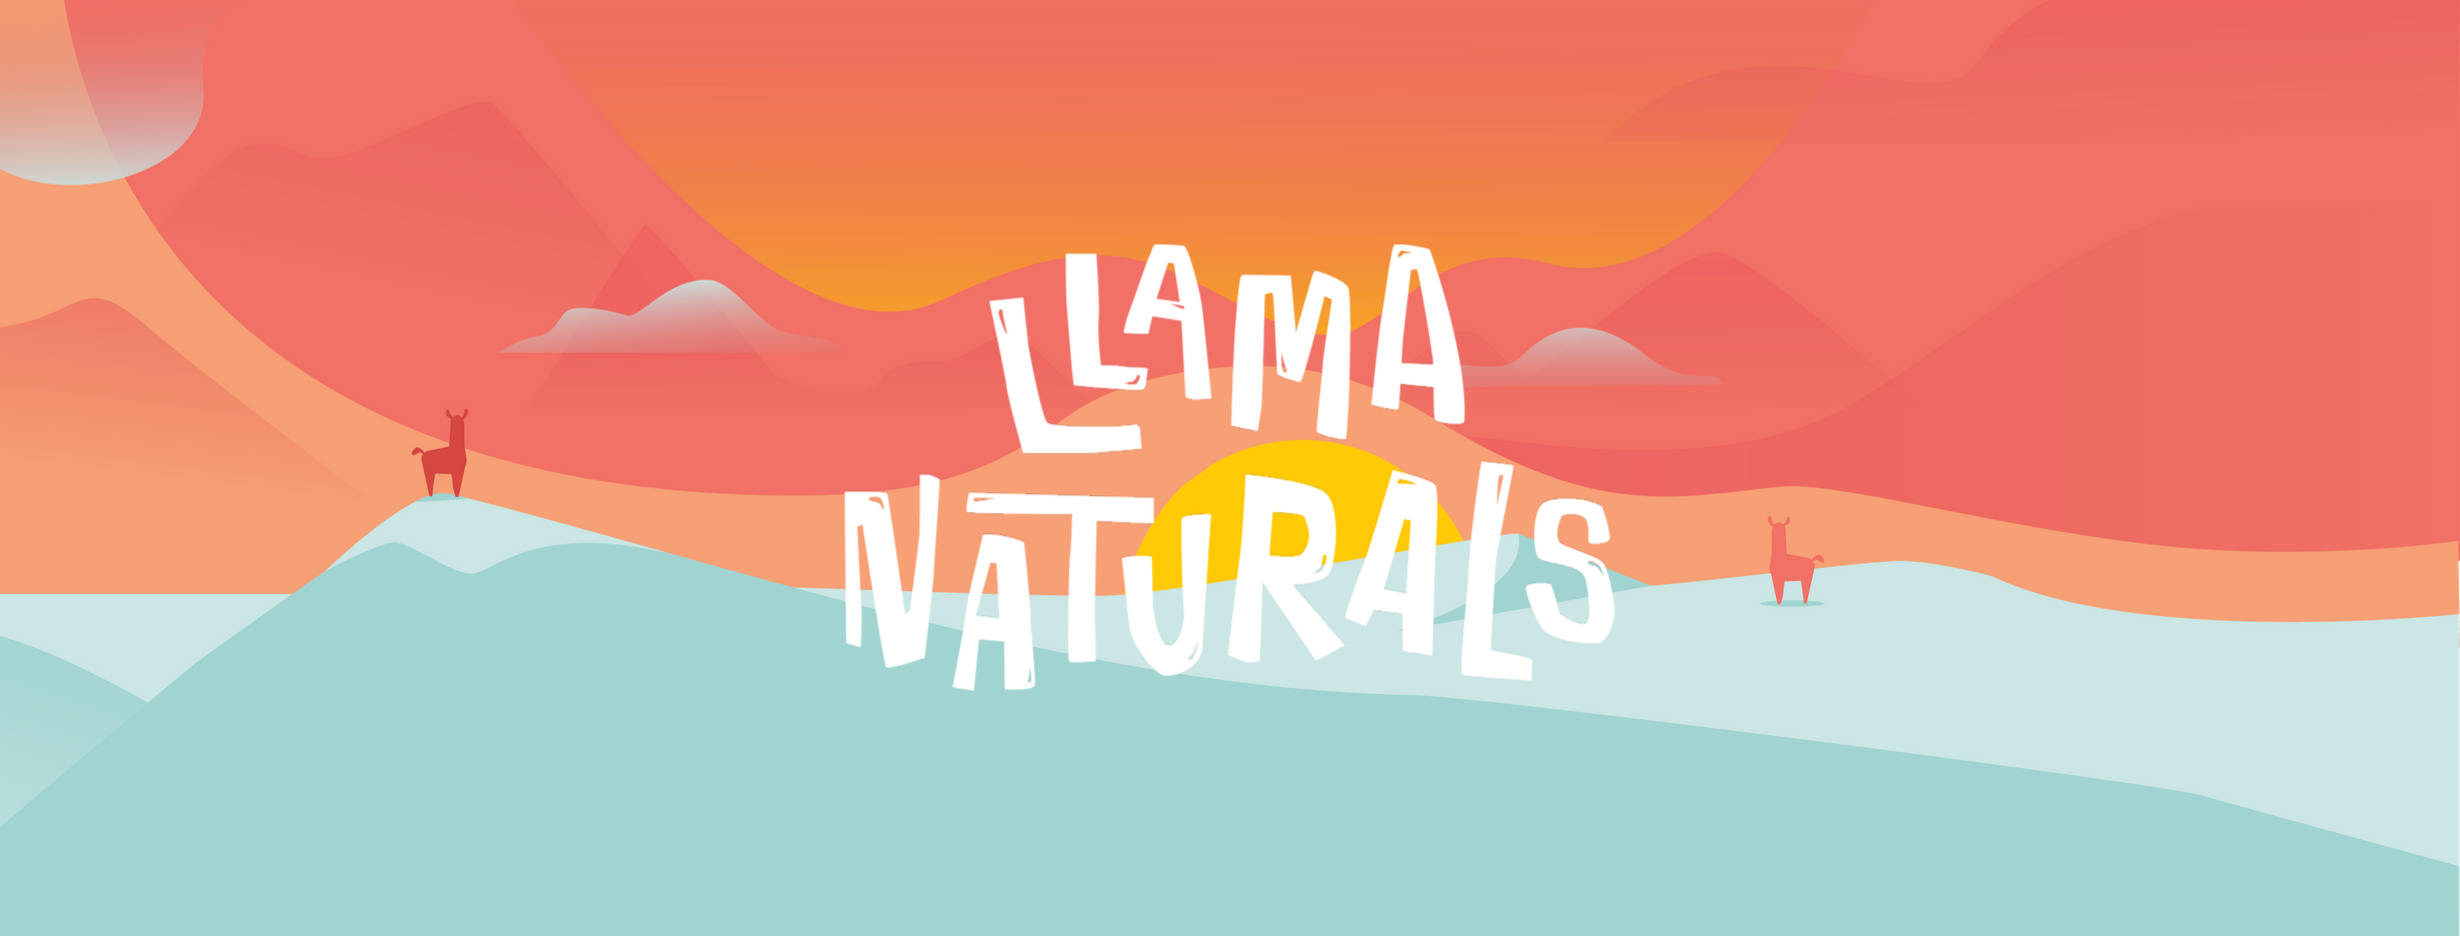 Llama Naturals Reviews: Get All The Details At Hello Subscription!